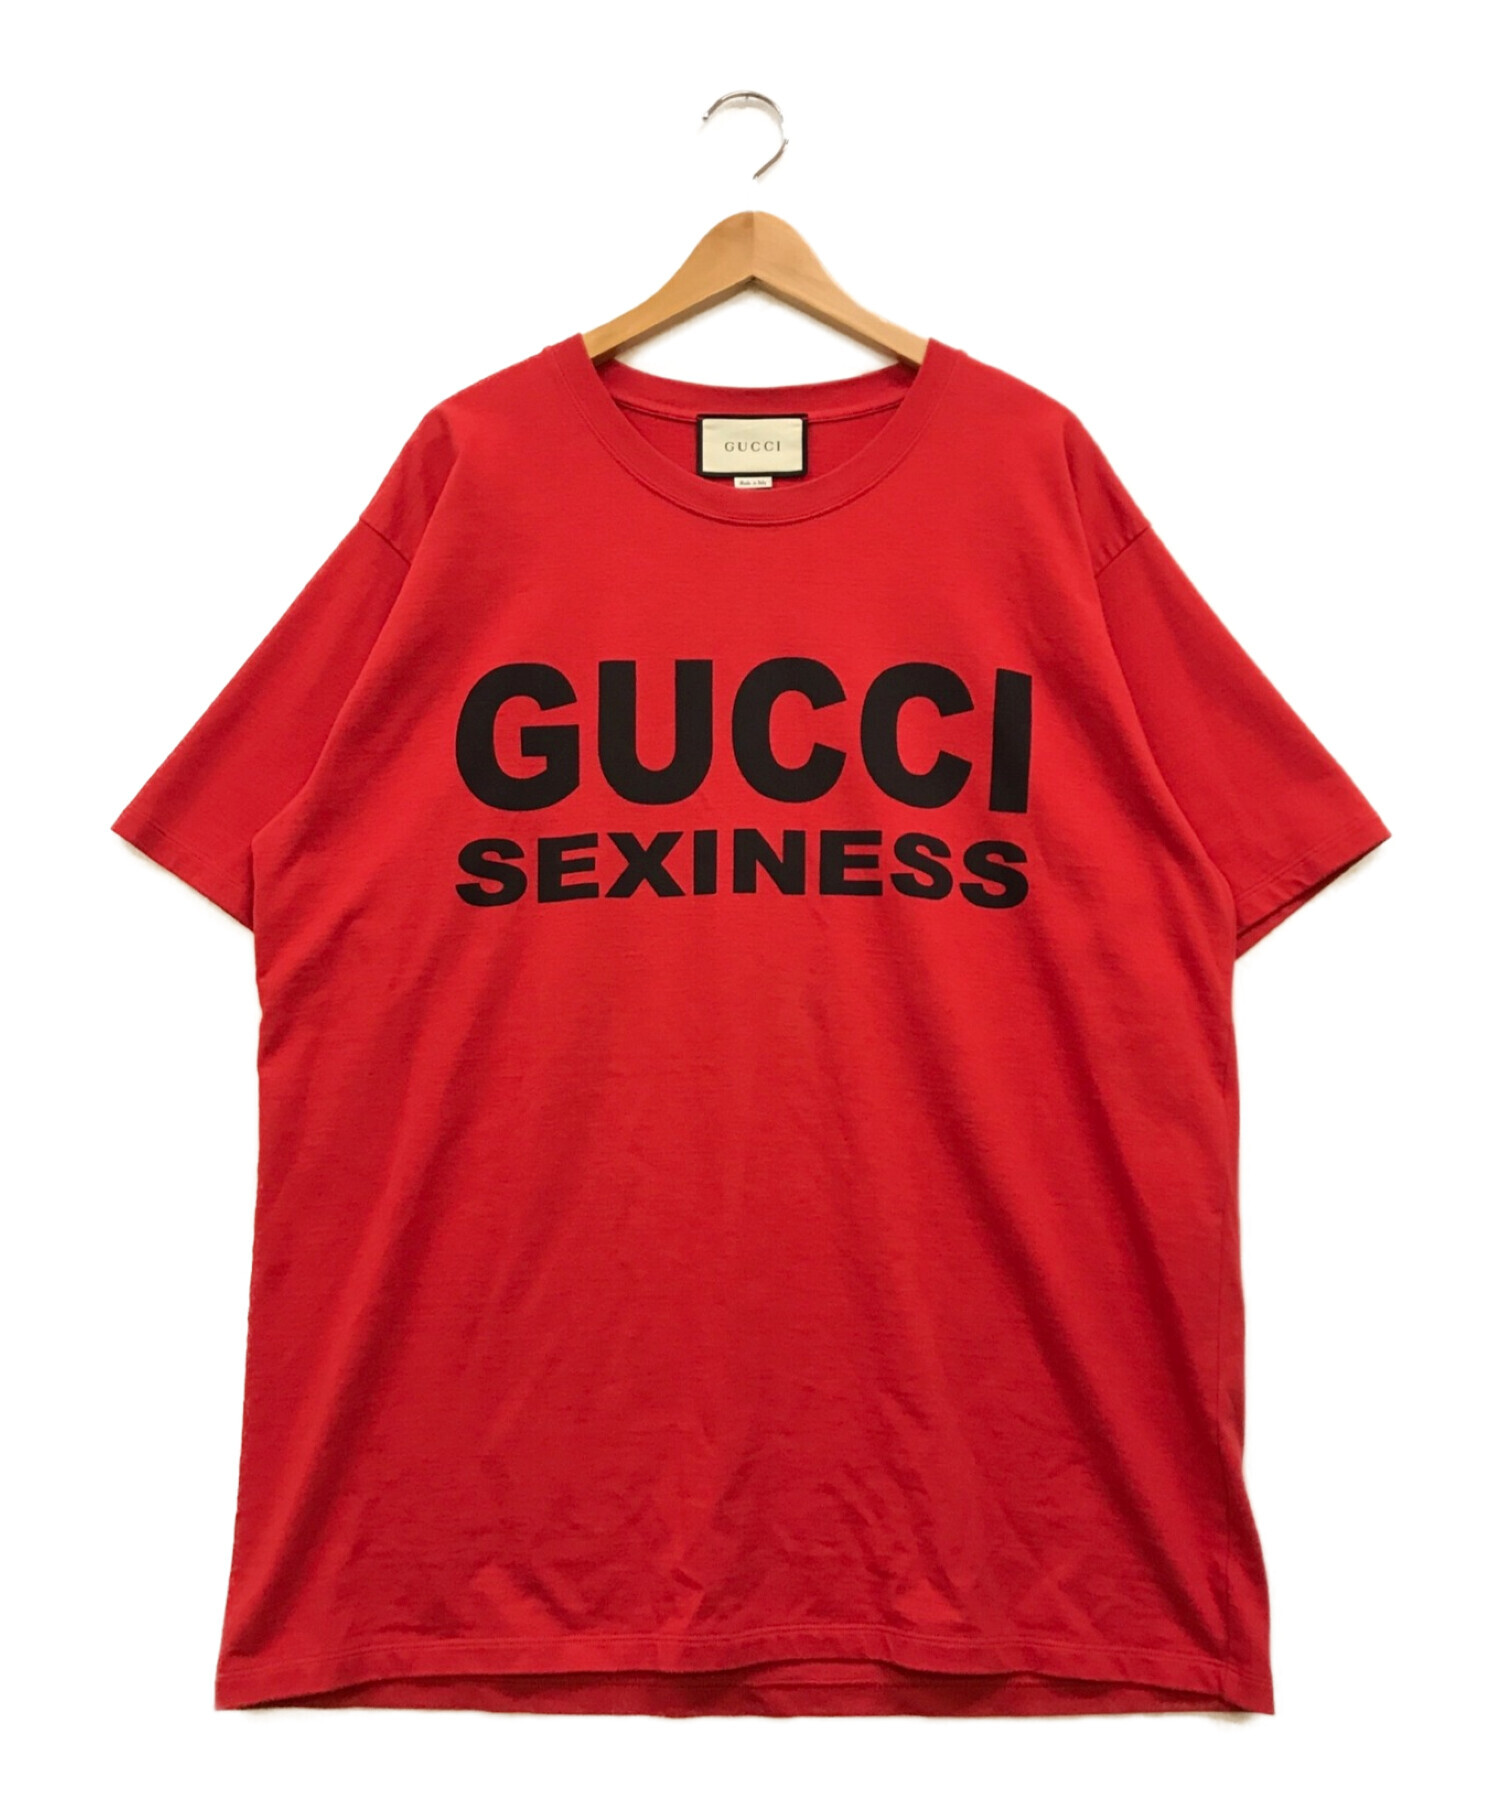 GUCCI (グッチ) SEXINESS プリントオーバーサイズTシャツ レッド サイズ:L